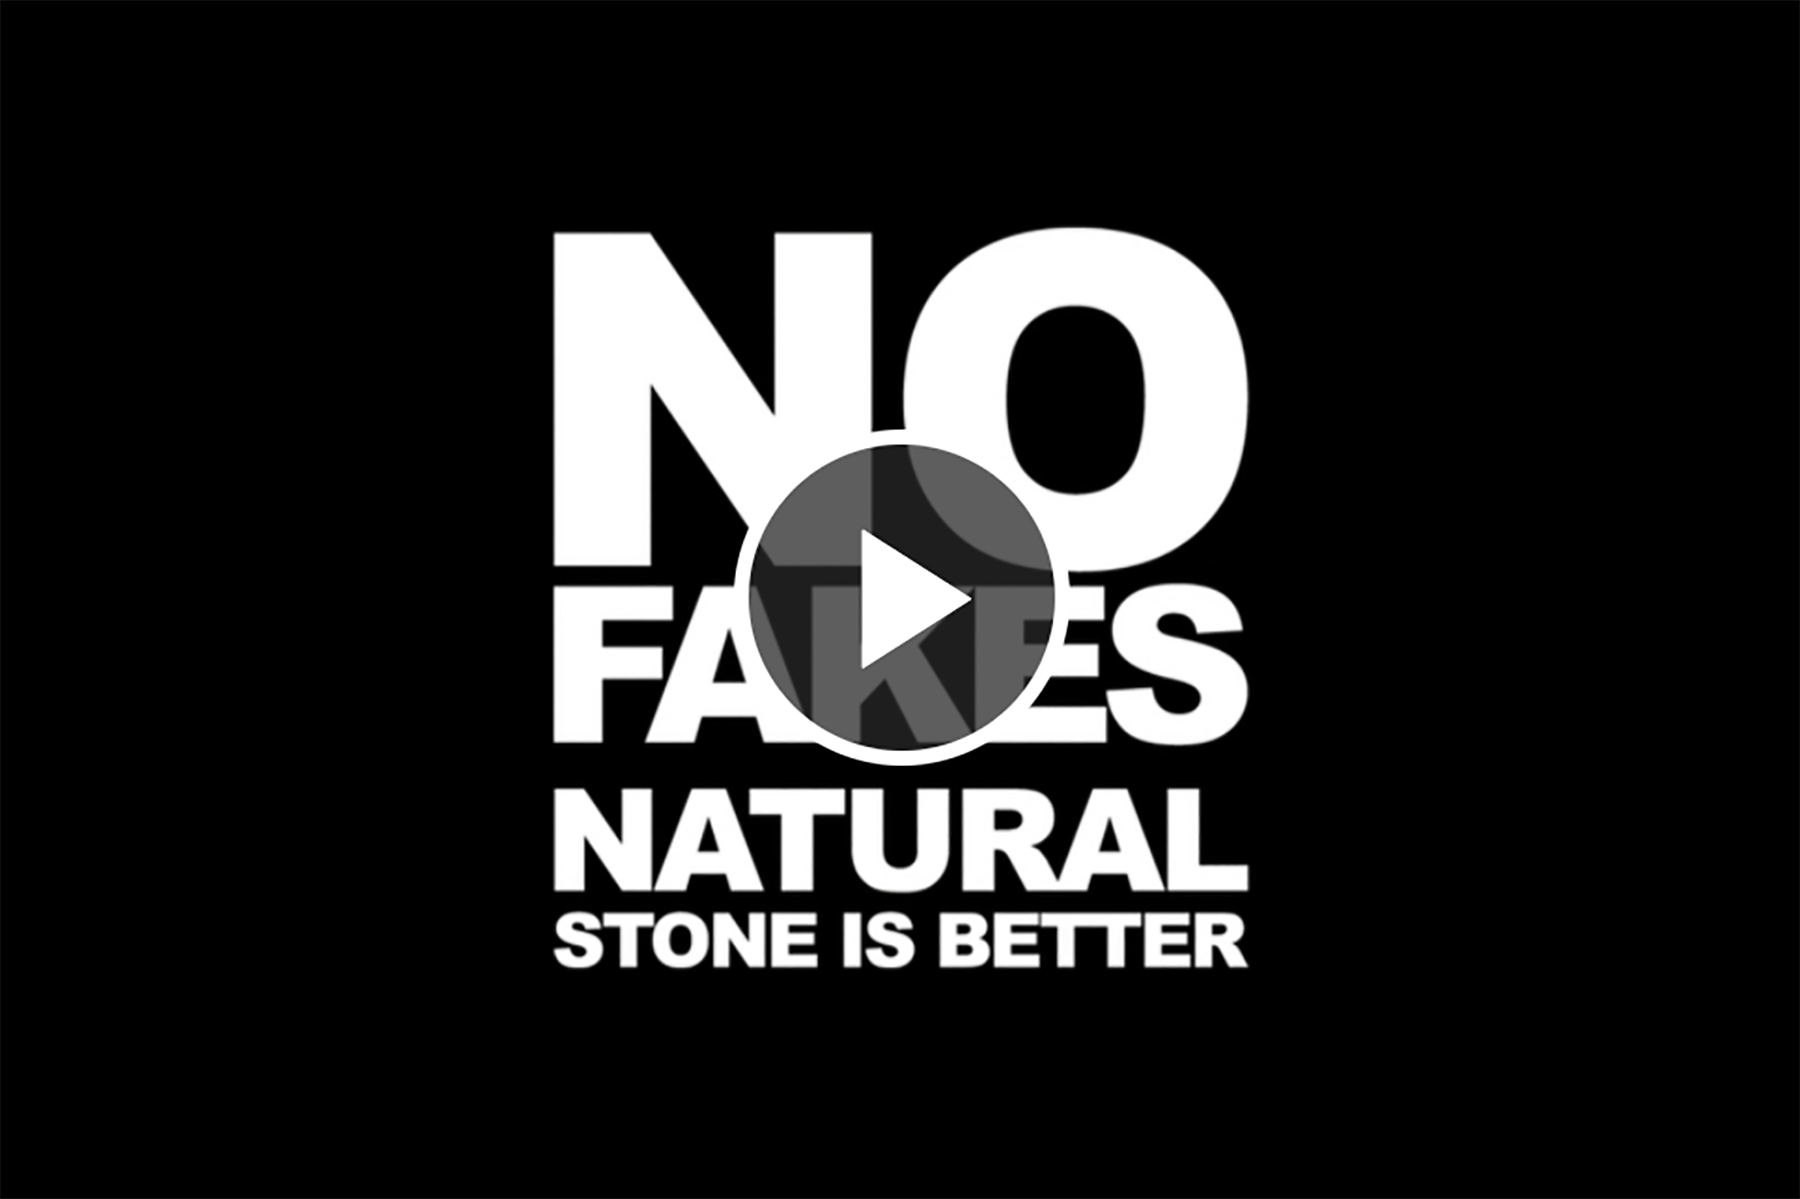 No fakes. Natural stone is better – Parte la nuova campagna PNA